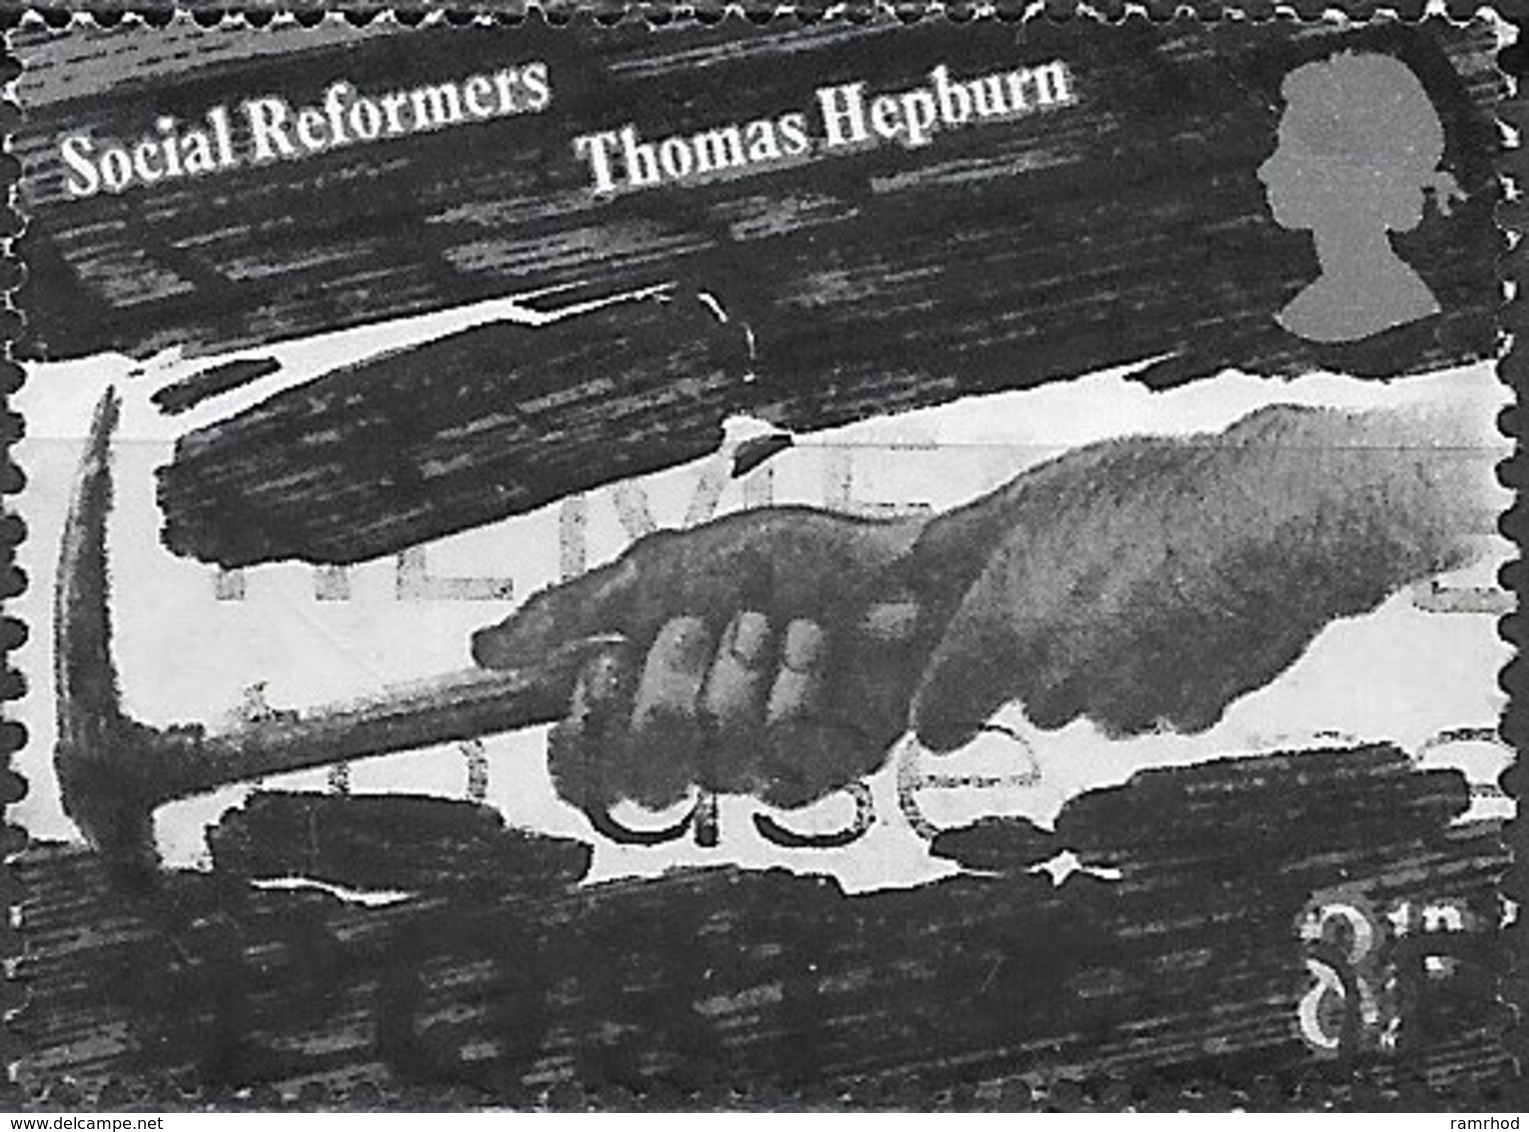 GREAT BRITAIN 1976 Social Reformers - 81/2p Hewing Coal (Thomas Hepburn) AVU - Used Stamps